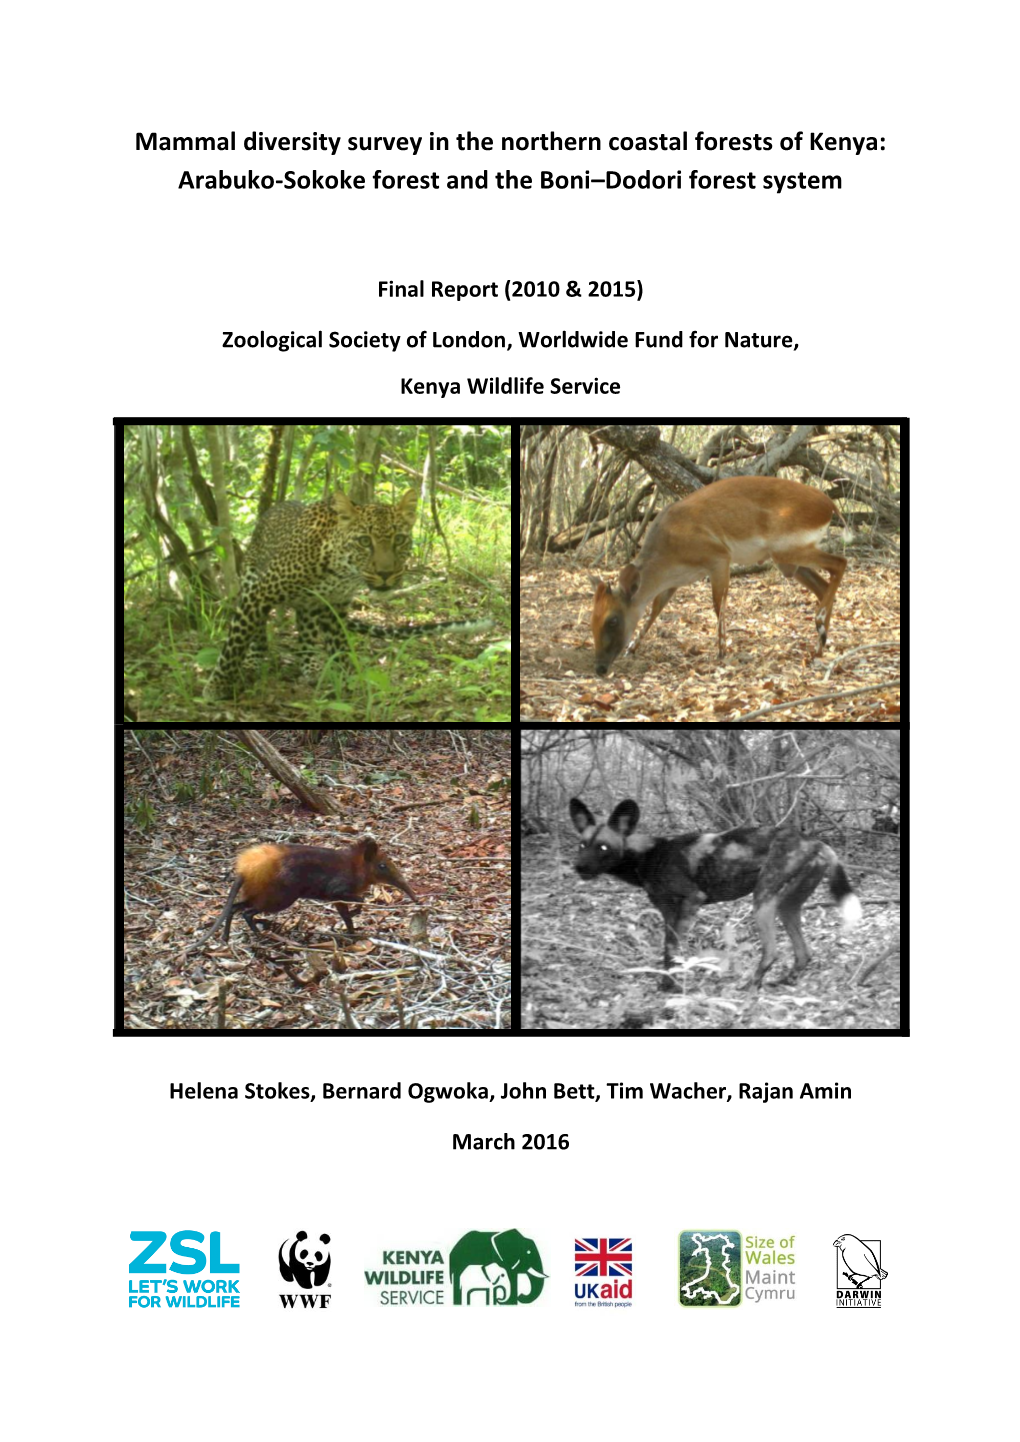 Mammal Diversity Survey in the Northern Coastal Forests of Kenya: Arabuko-Sokoke Forest and the Boni–Dodori Forest System